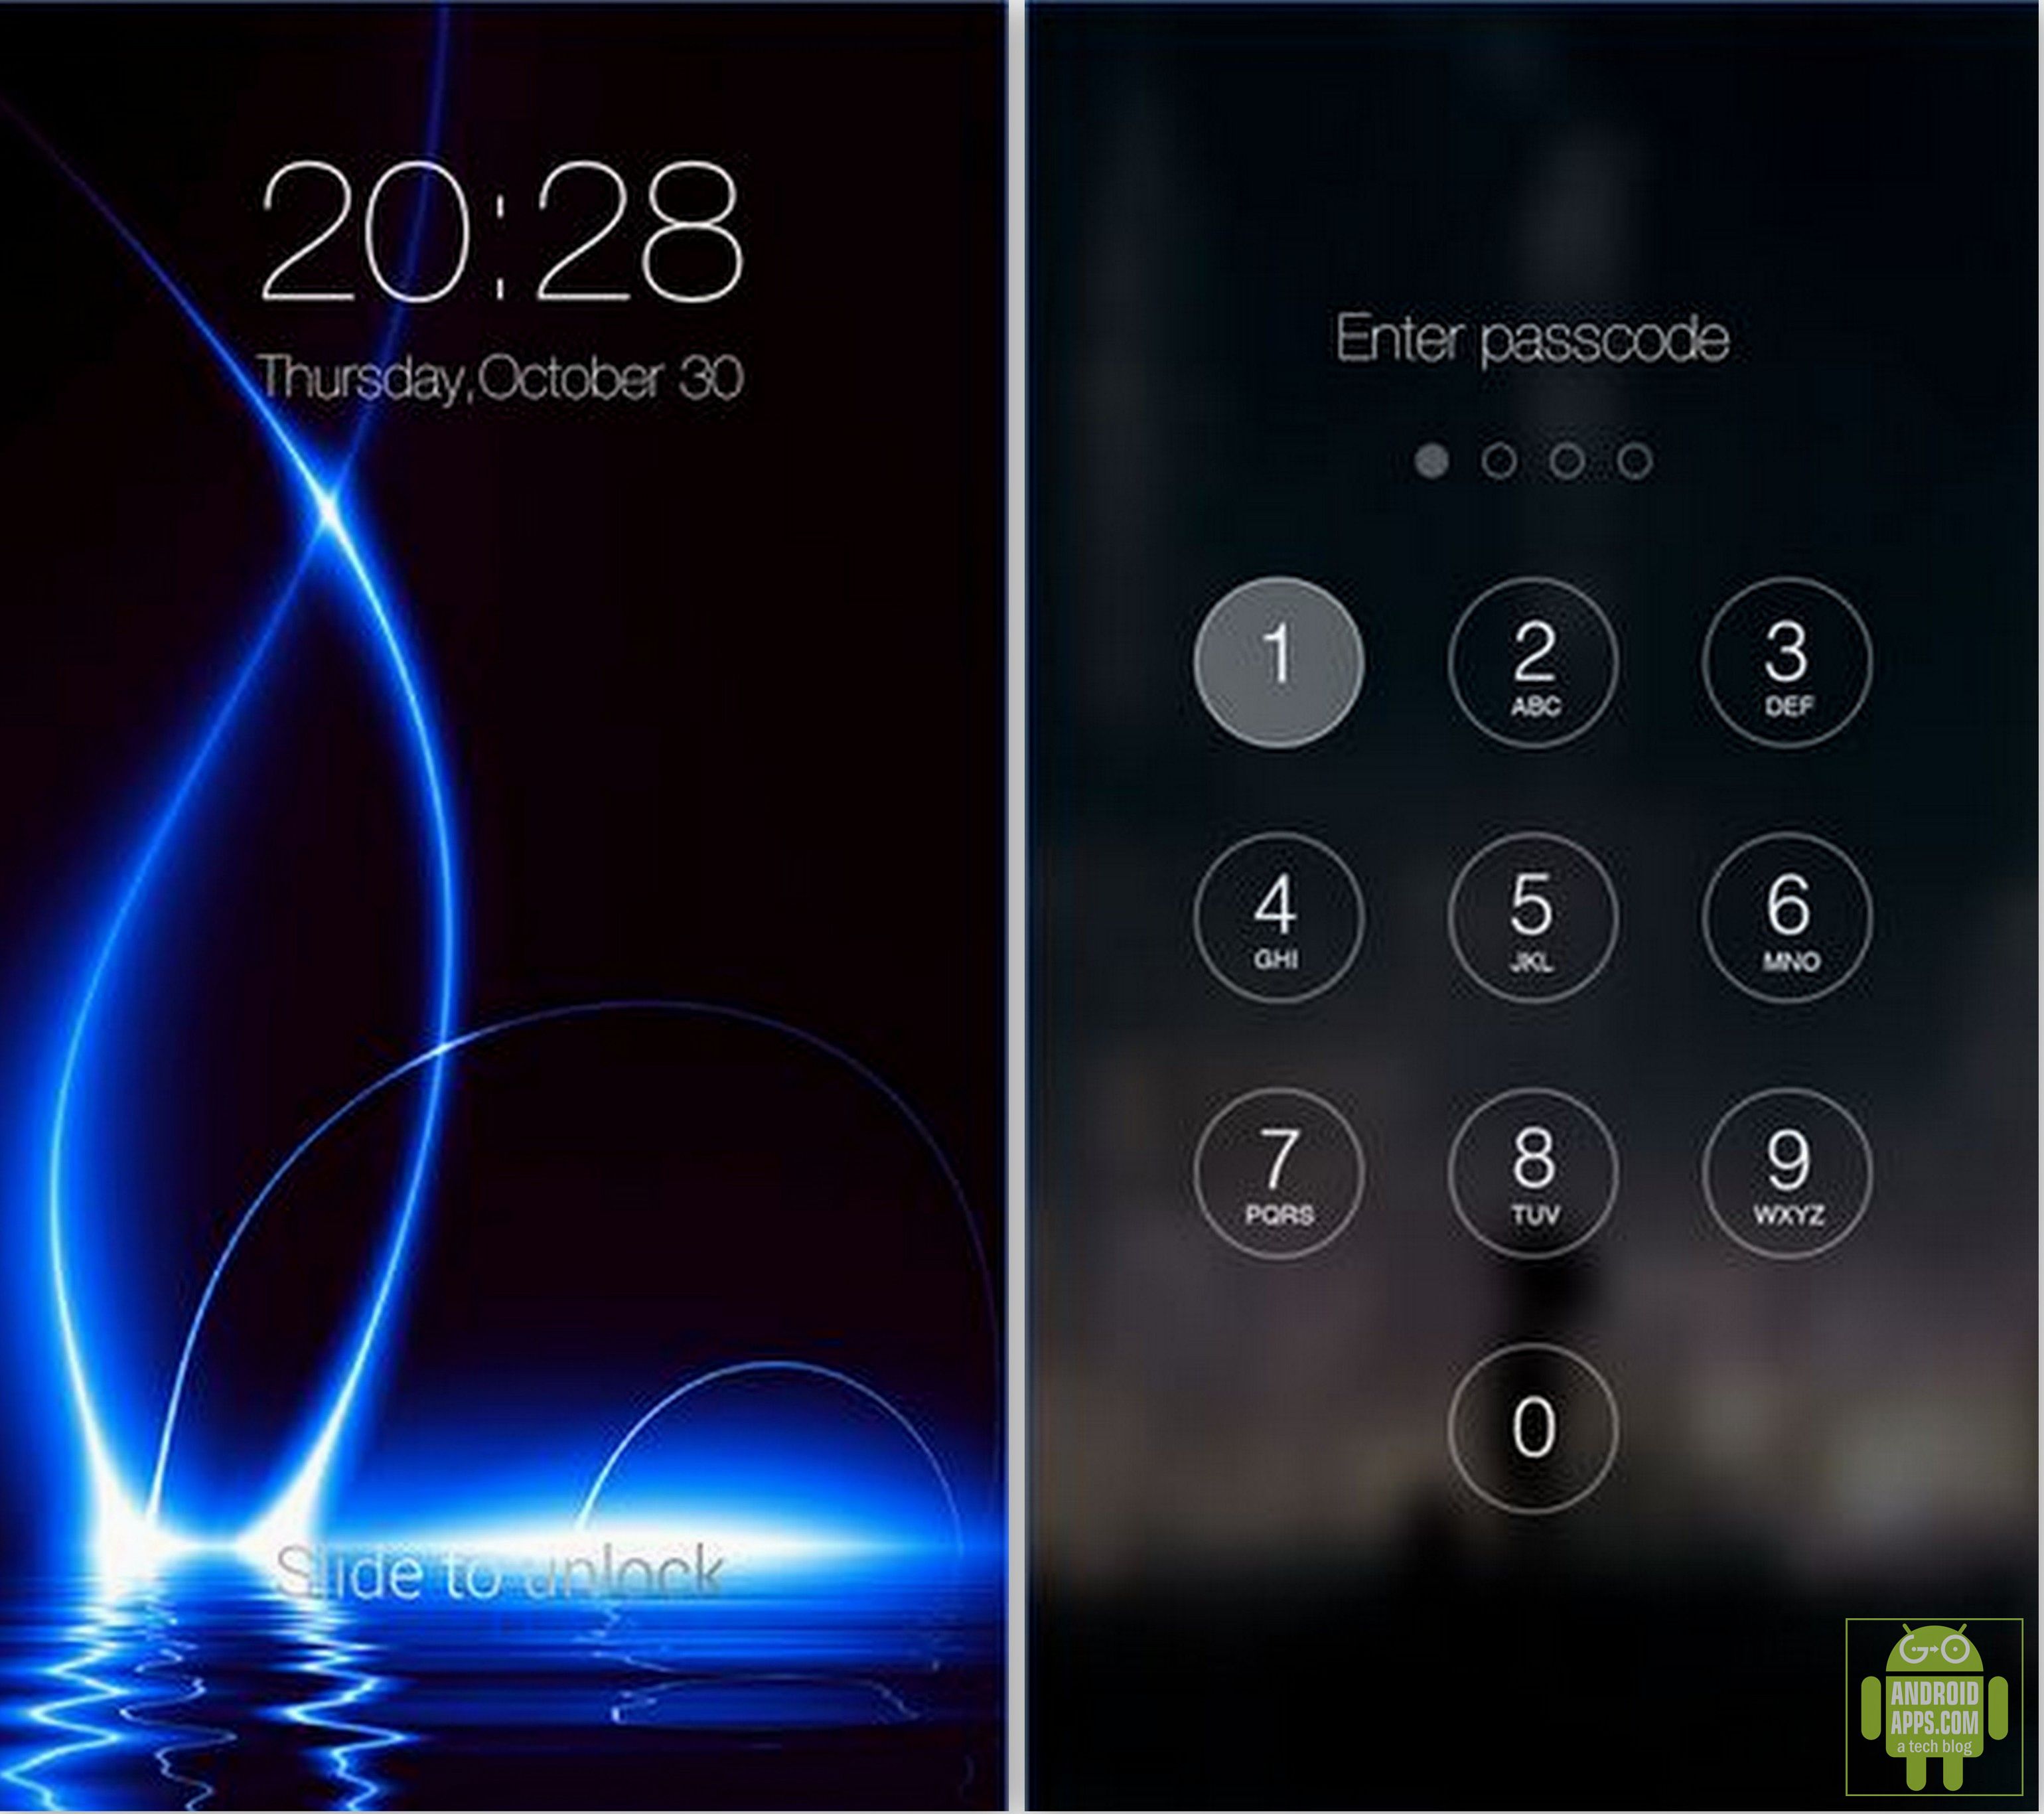 app lock wallpaper,licht,text,bildschirmfoto,gadget,technologie